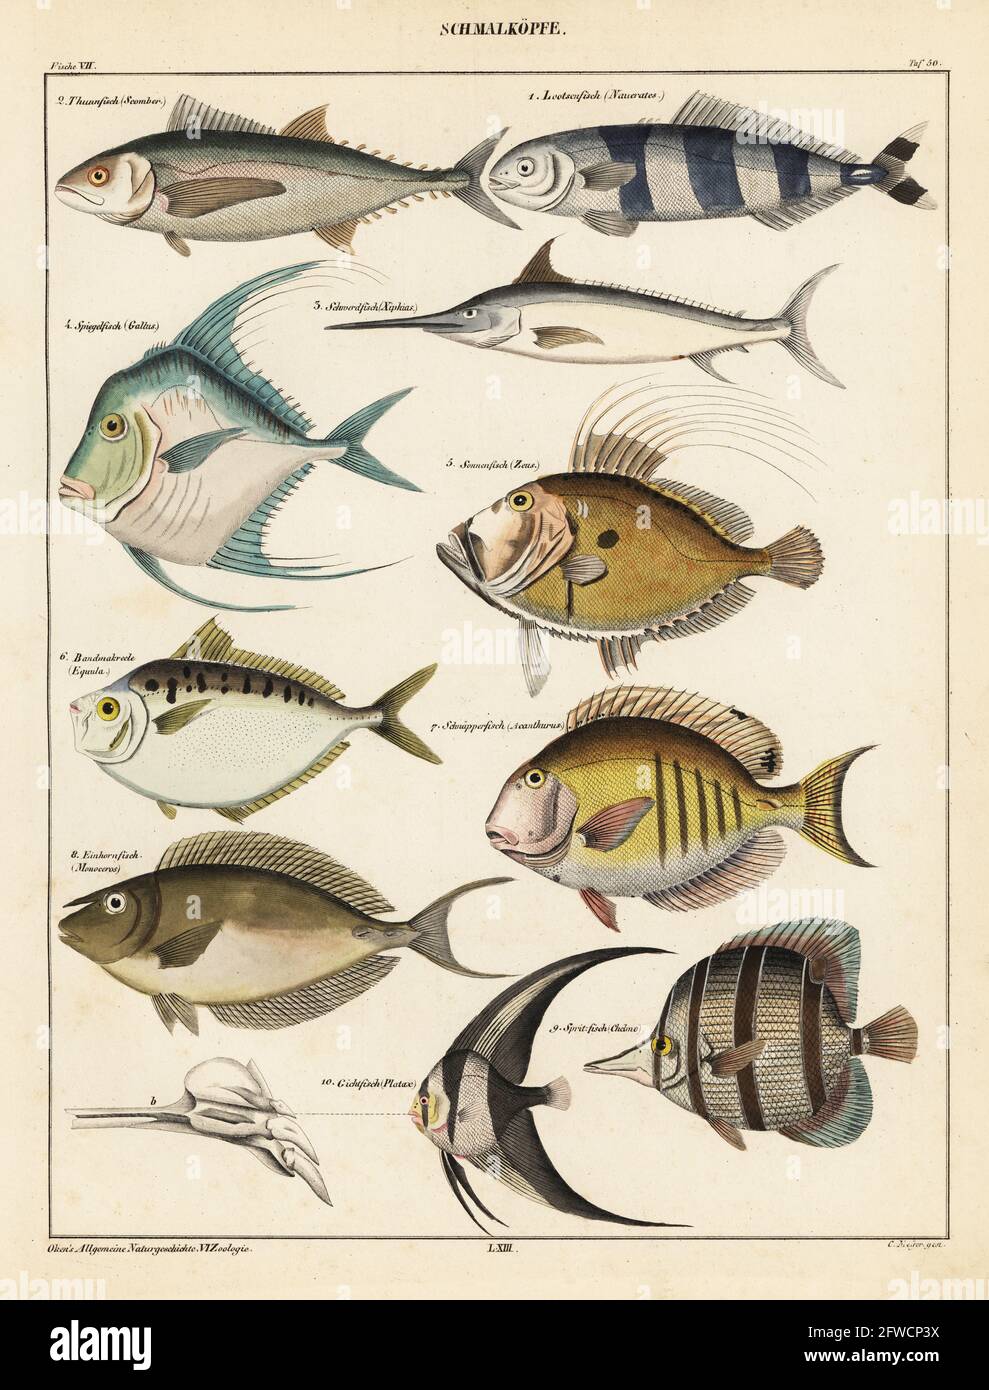 Varieties of fish. Plate 50. Schmalkopfe: 1 pilot fish, Naucrates ductor, Lootsenfisch, 2 endangered Atlantic bluefin tuna, Thunnus thynnus, Thunnfisch, 3 swordfish, Xiphias gladius, Schwerdfisch, 4 African pompano, Alectis ciliaris, Spiegelfisch, 5 John Dory, Zeus faber, Sonnenfisch, 6 pugnose ponyfish, Secutor insidiator, Bandmakreele, 7 doctorfish, Ananthurus chirurgus, Schnapperfisch, 8 unicorn leatherjacket, Aluterus monoceros,  Einhornfisc, 9 copperband butterflyfish, Chelmon rostratus, Spritzfisch, 10 teira batfish, Platax teira, Gichtfisch. Handcoloured lithograph by C. Meyer from Lore Stock Photo